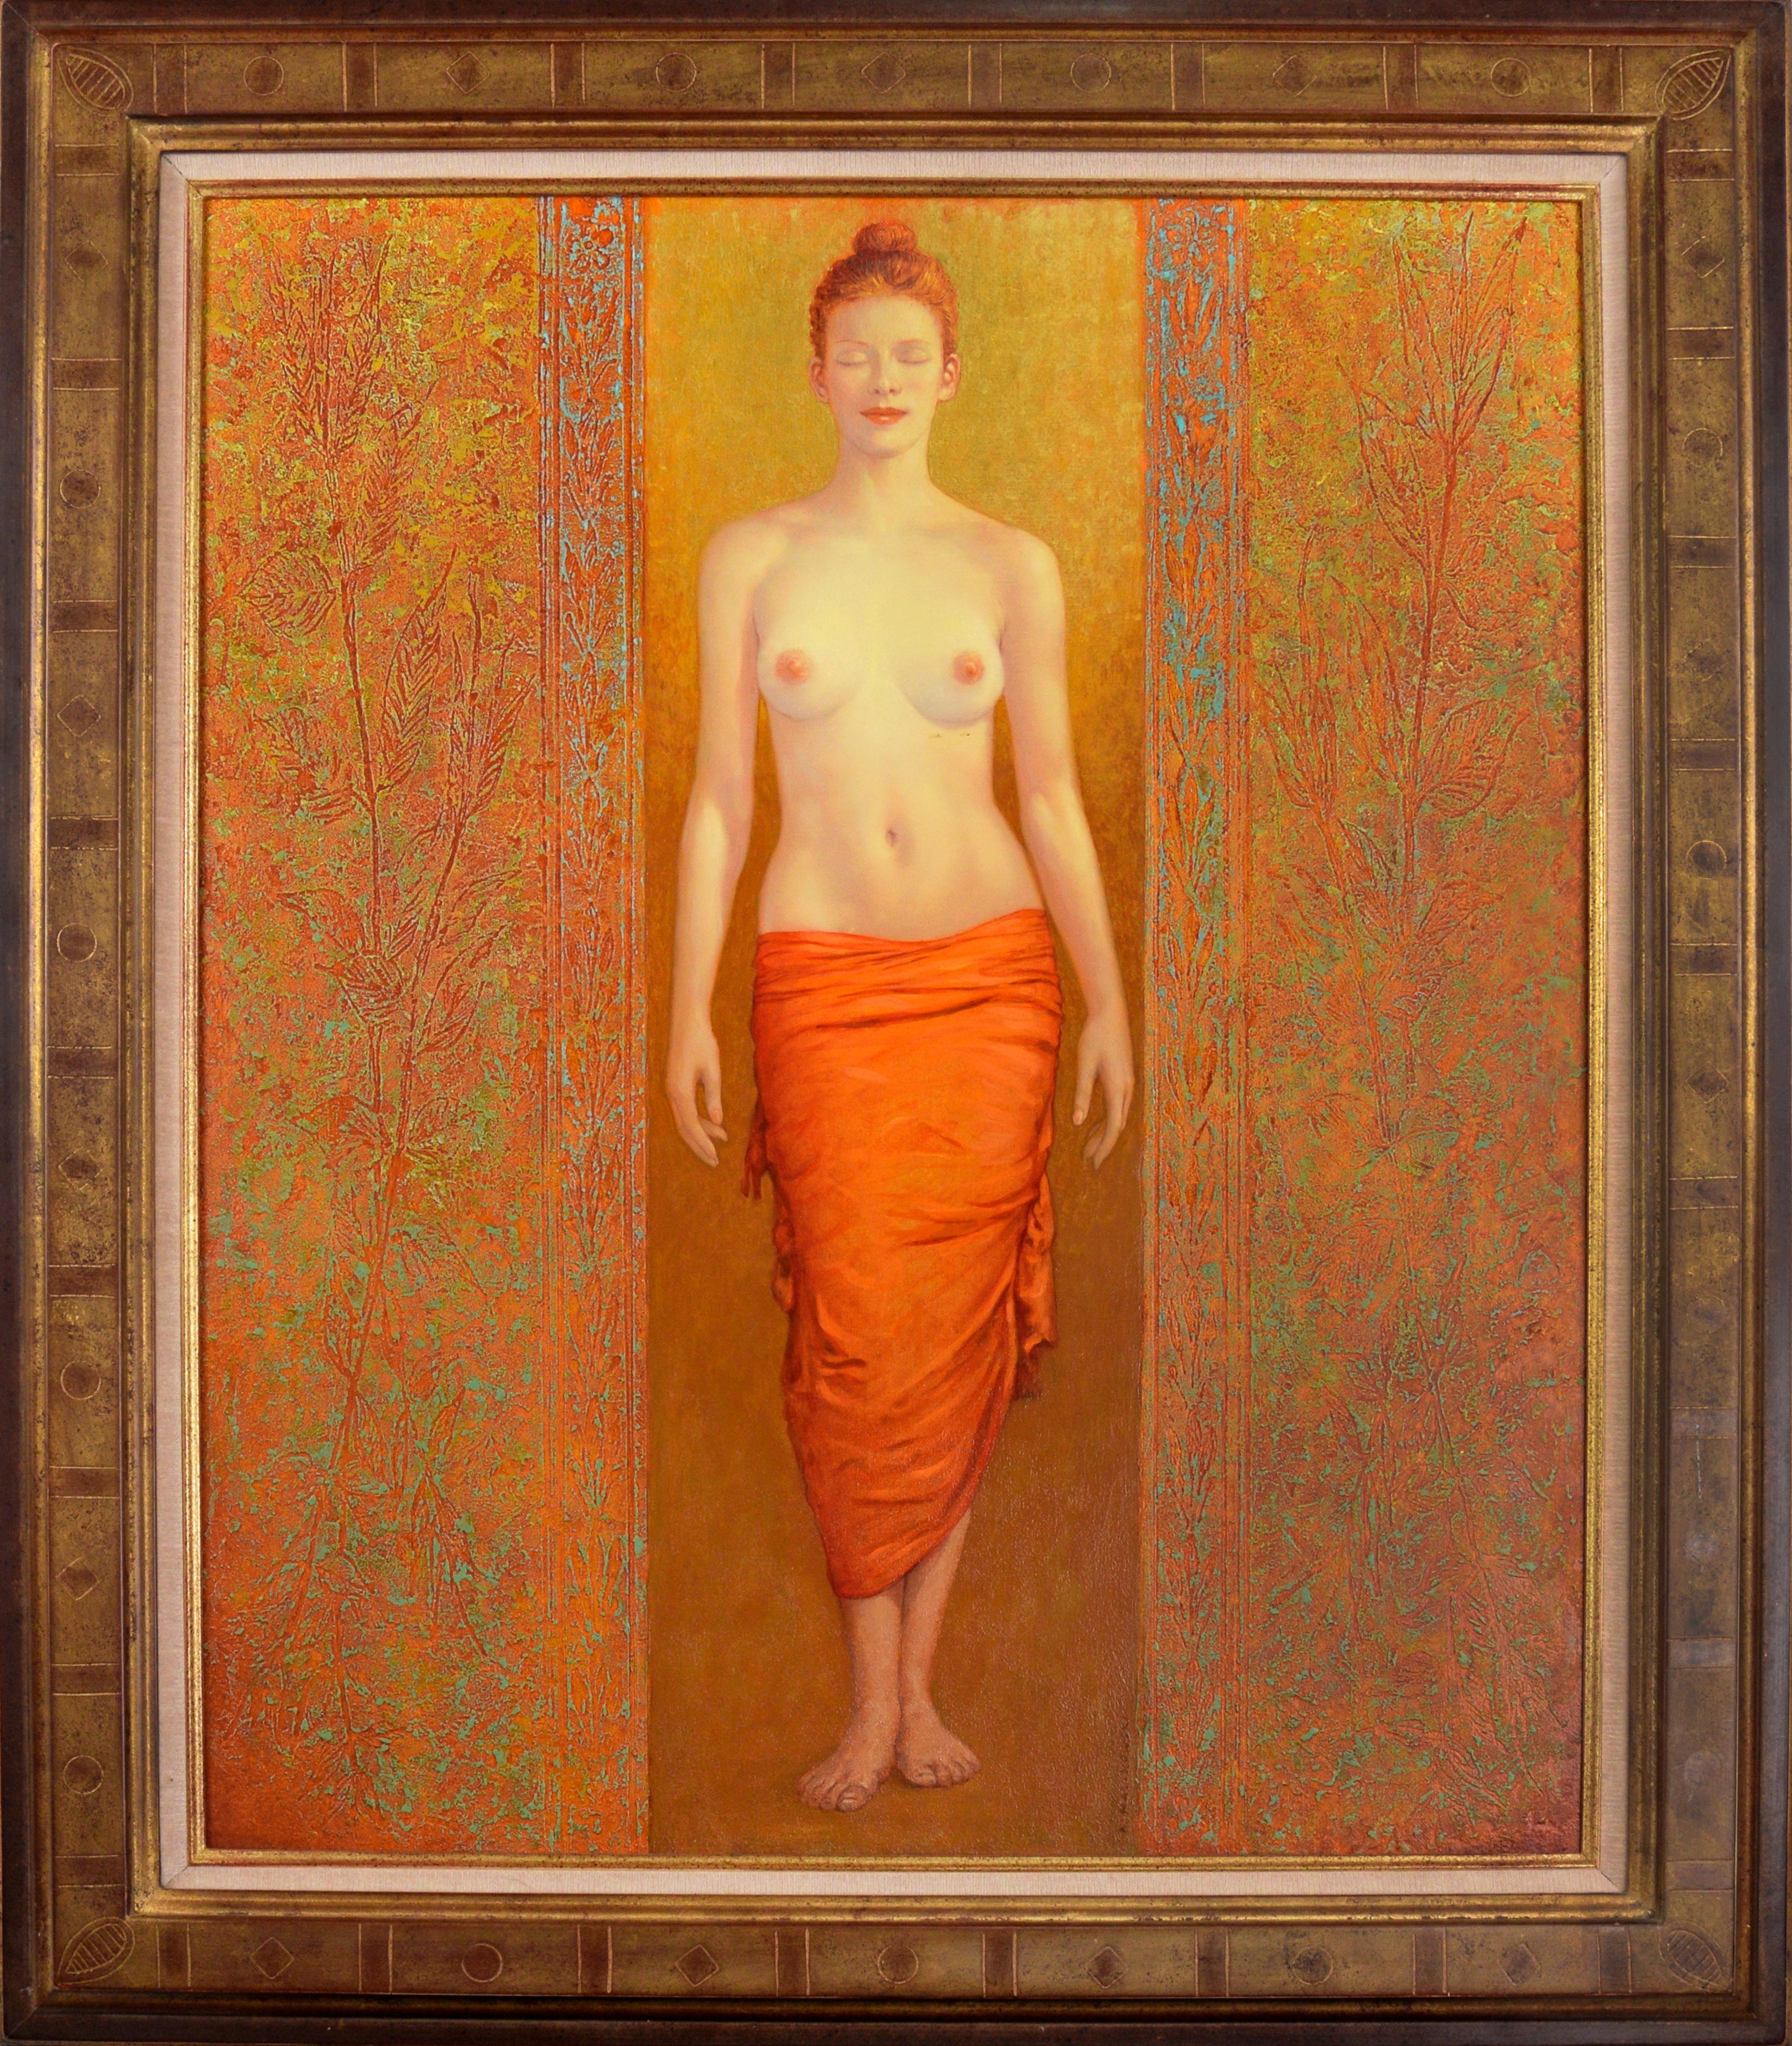 Andrzej Malinowski Figurative Painting - "Belle Saison" The Beautiful Season - Figurative Nude Study